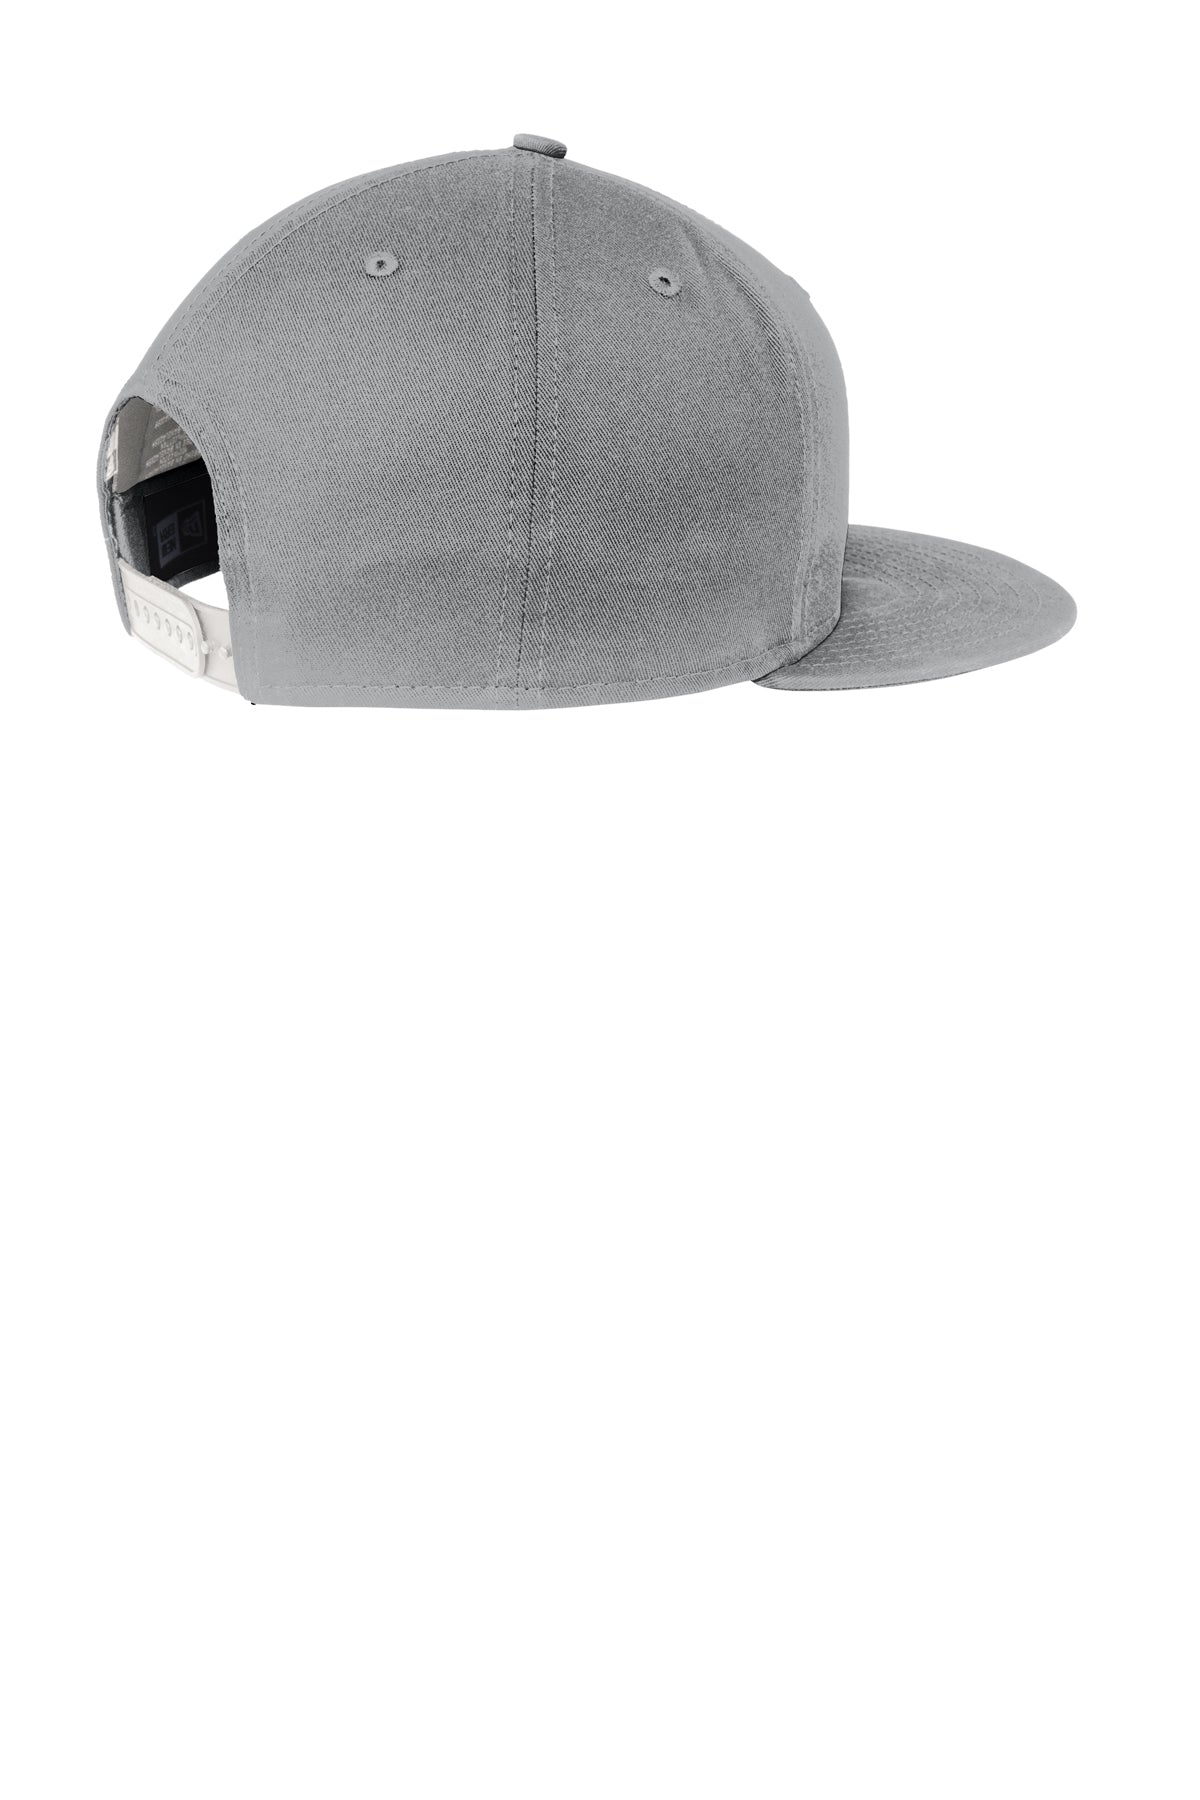 New Era Flat Bill Snapback Customized Caps, Grey